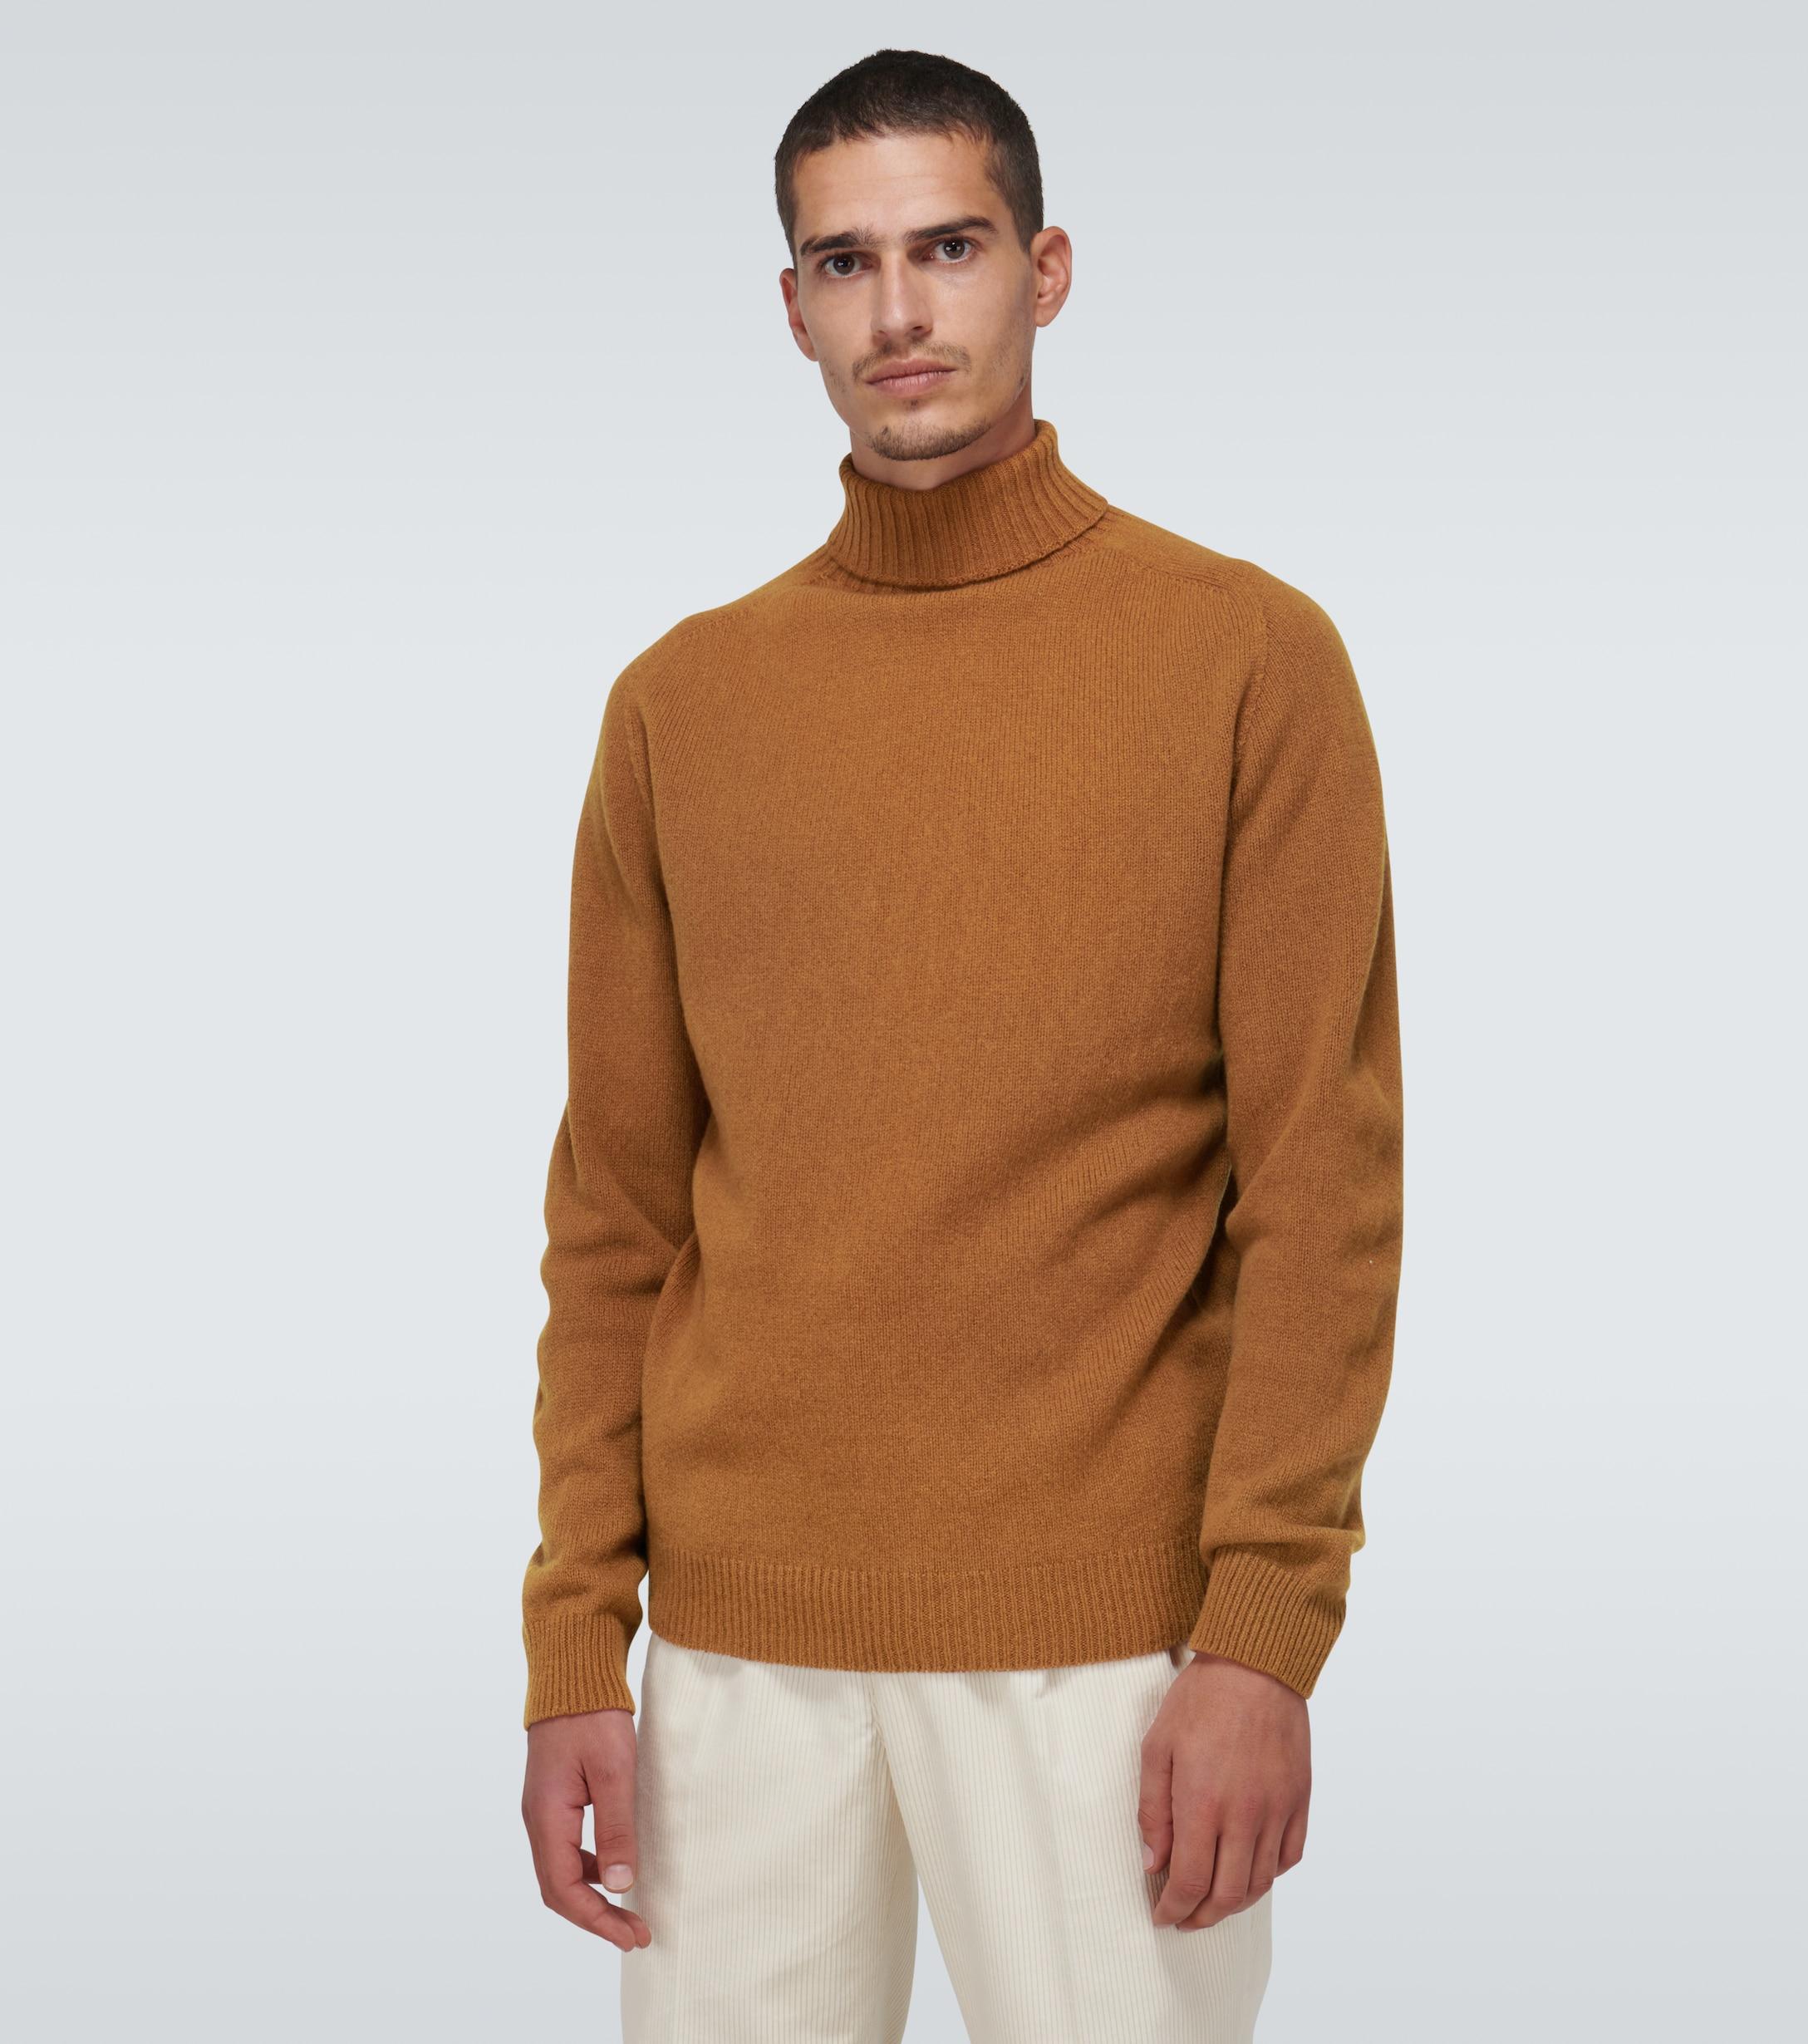 Sunspel Lambswool Turtleneck Sweater in Brown for Men - Lyst